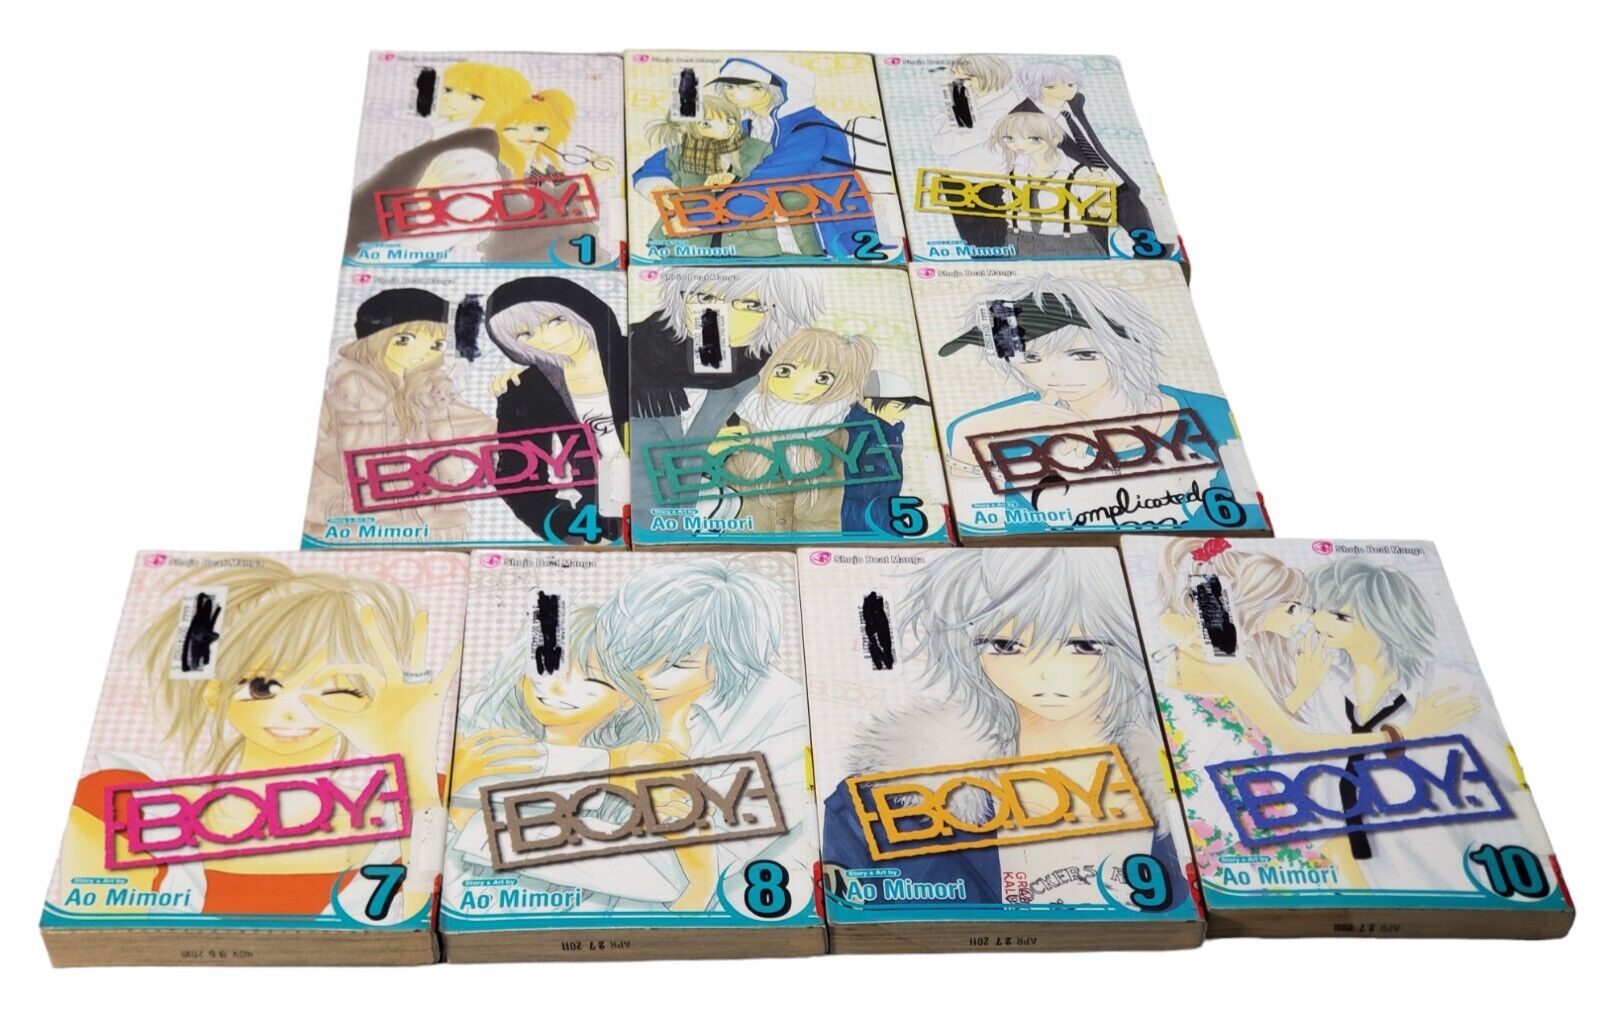 B.O.D.Y. (BODY) by Ao Mimori Vol 1-10 Complete English Set Manga Lot